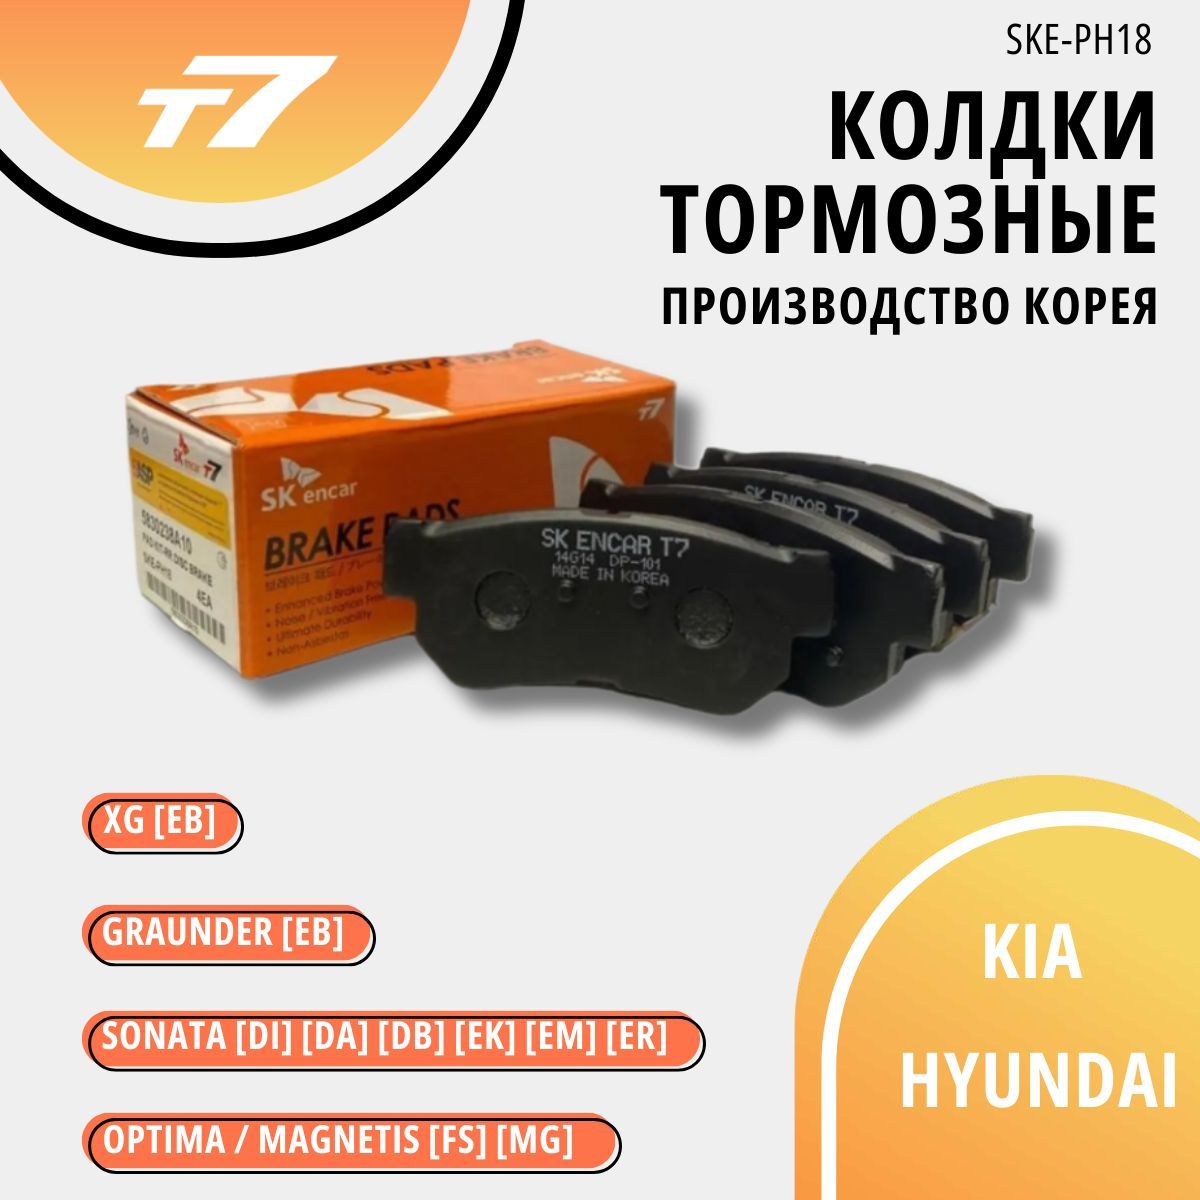 Тормозные колодки/T7+ Hyundai Sonata, Grandeur, Kia Optima/Magentis/SKE-PH18/ задние